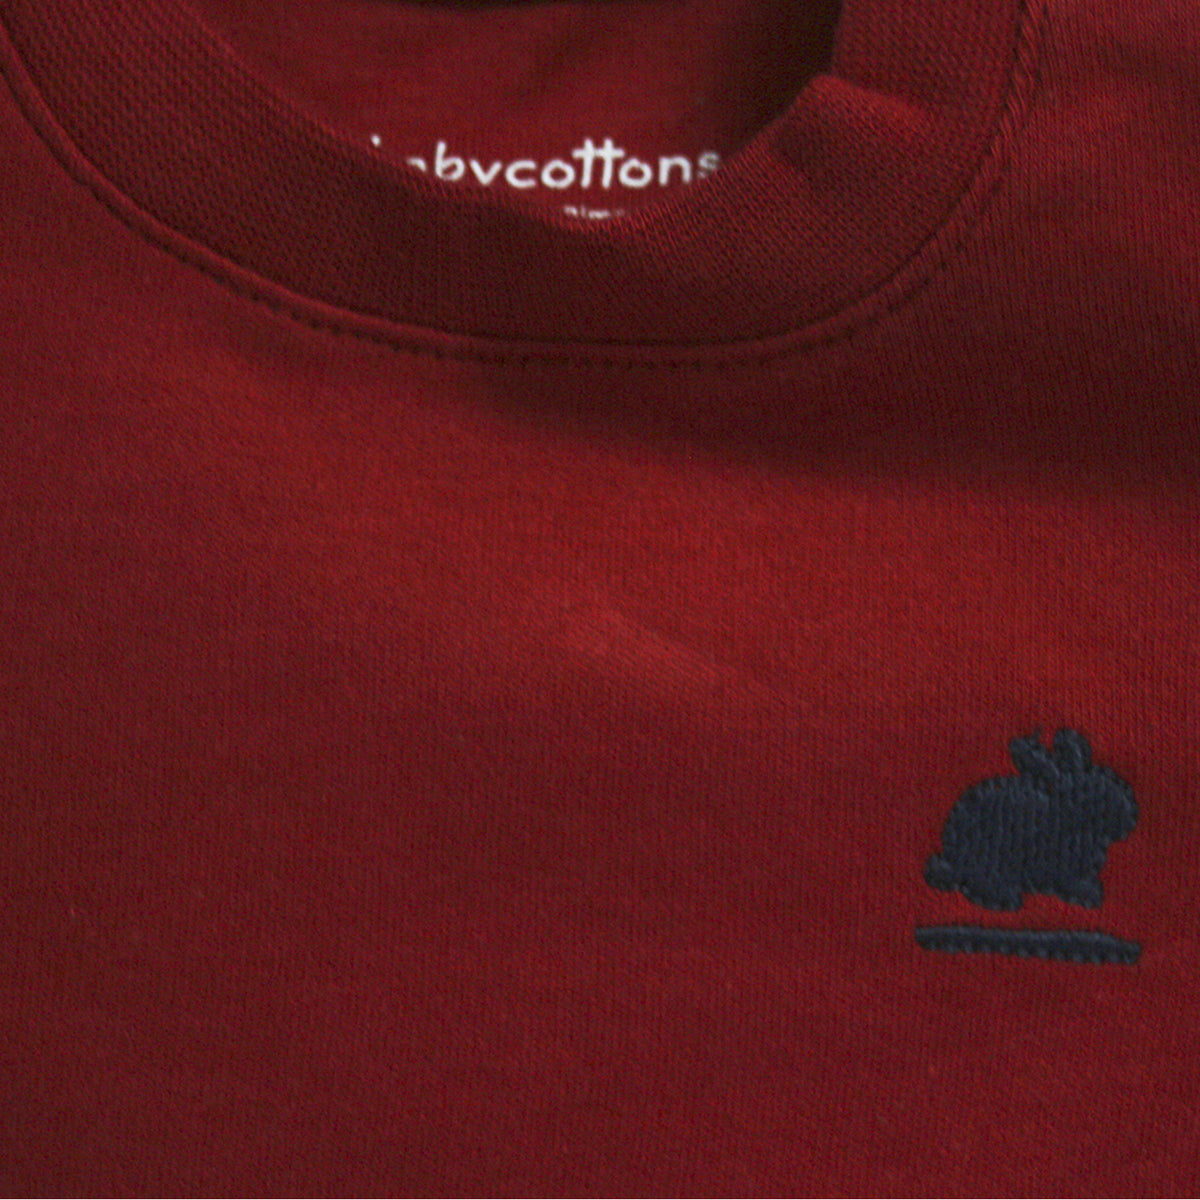 Body Babycottons T-Shirt ML Pima Rojo